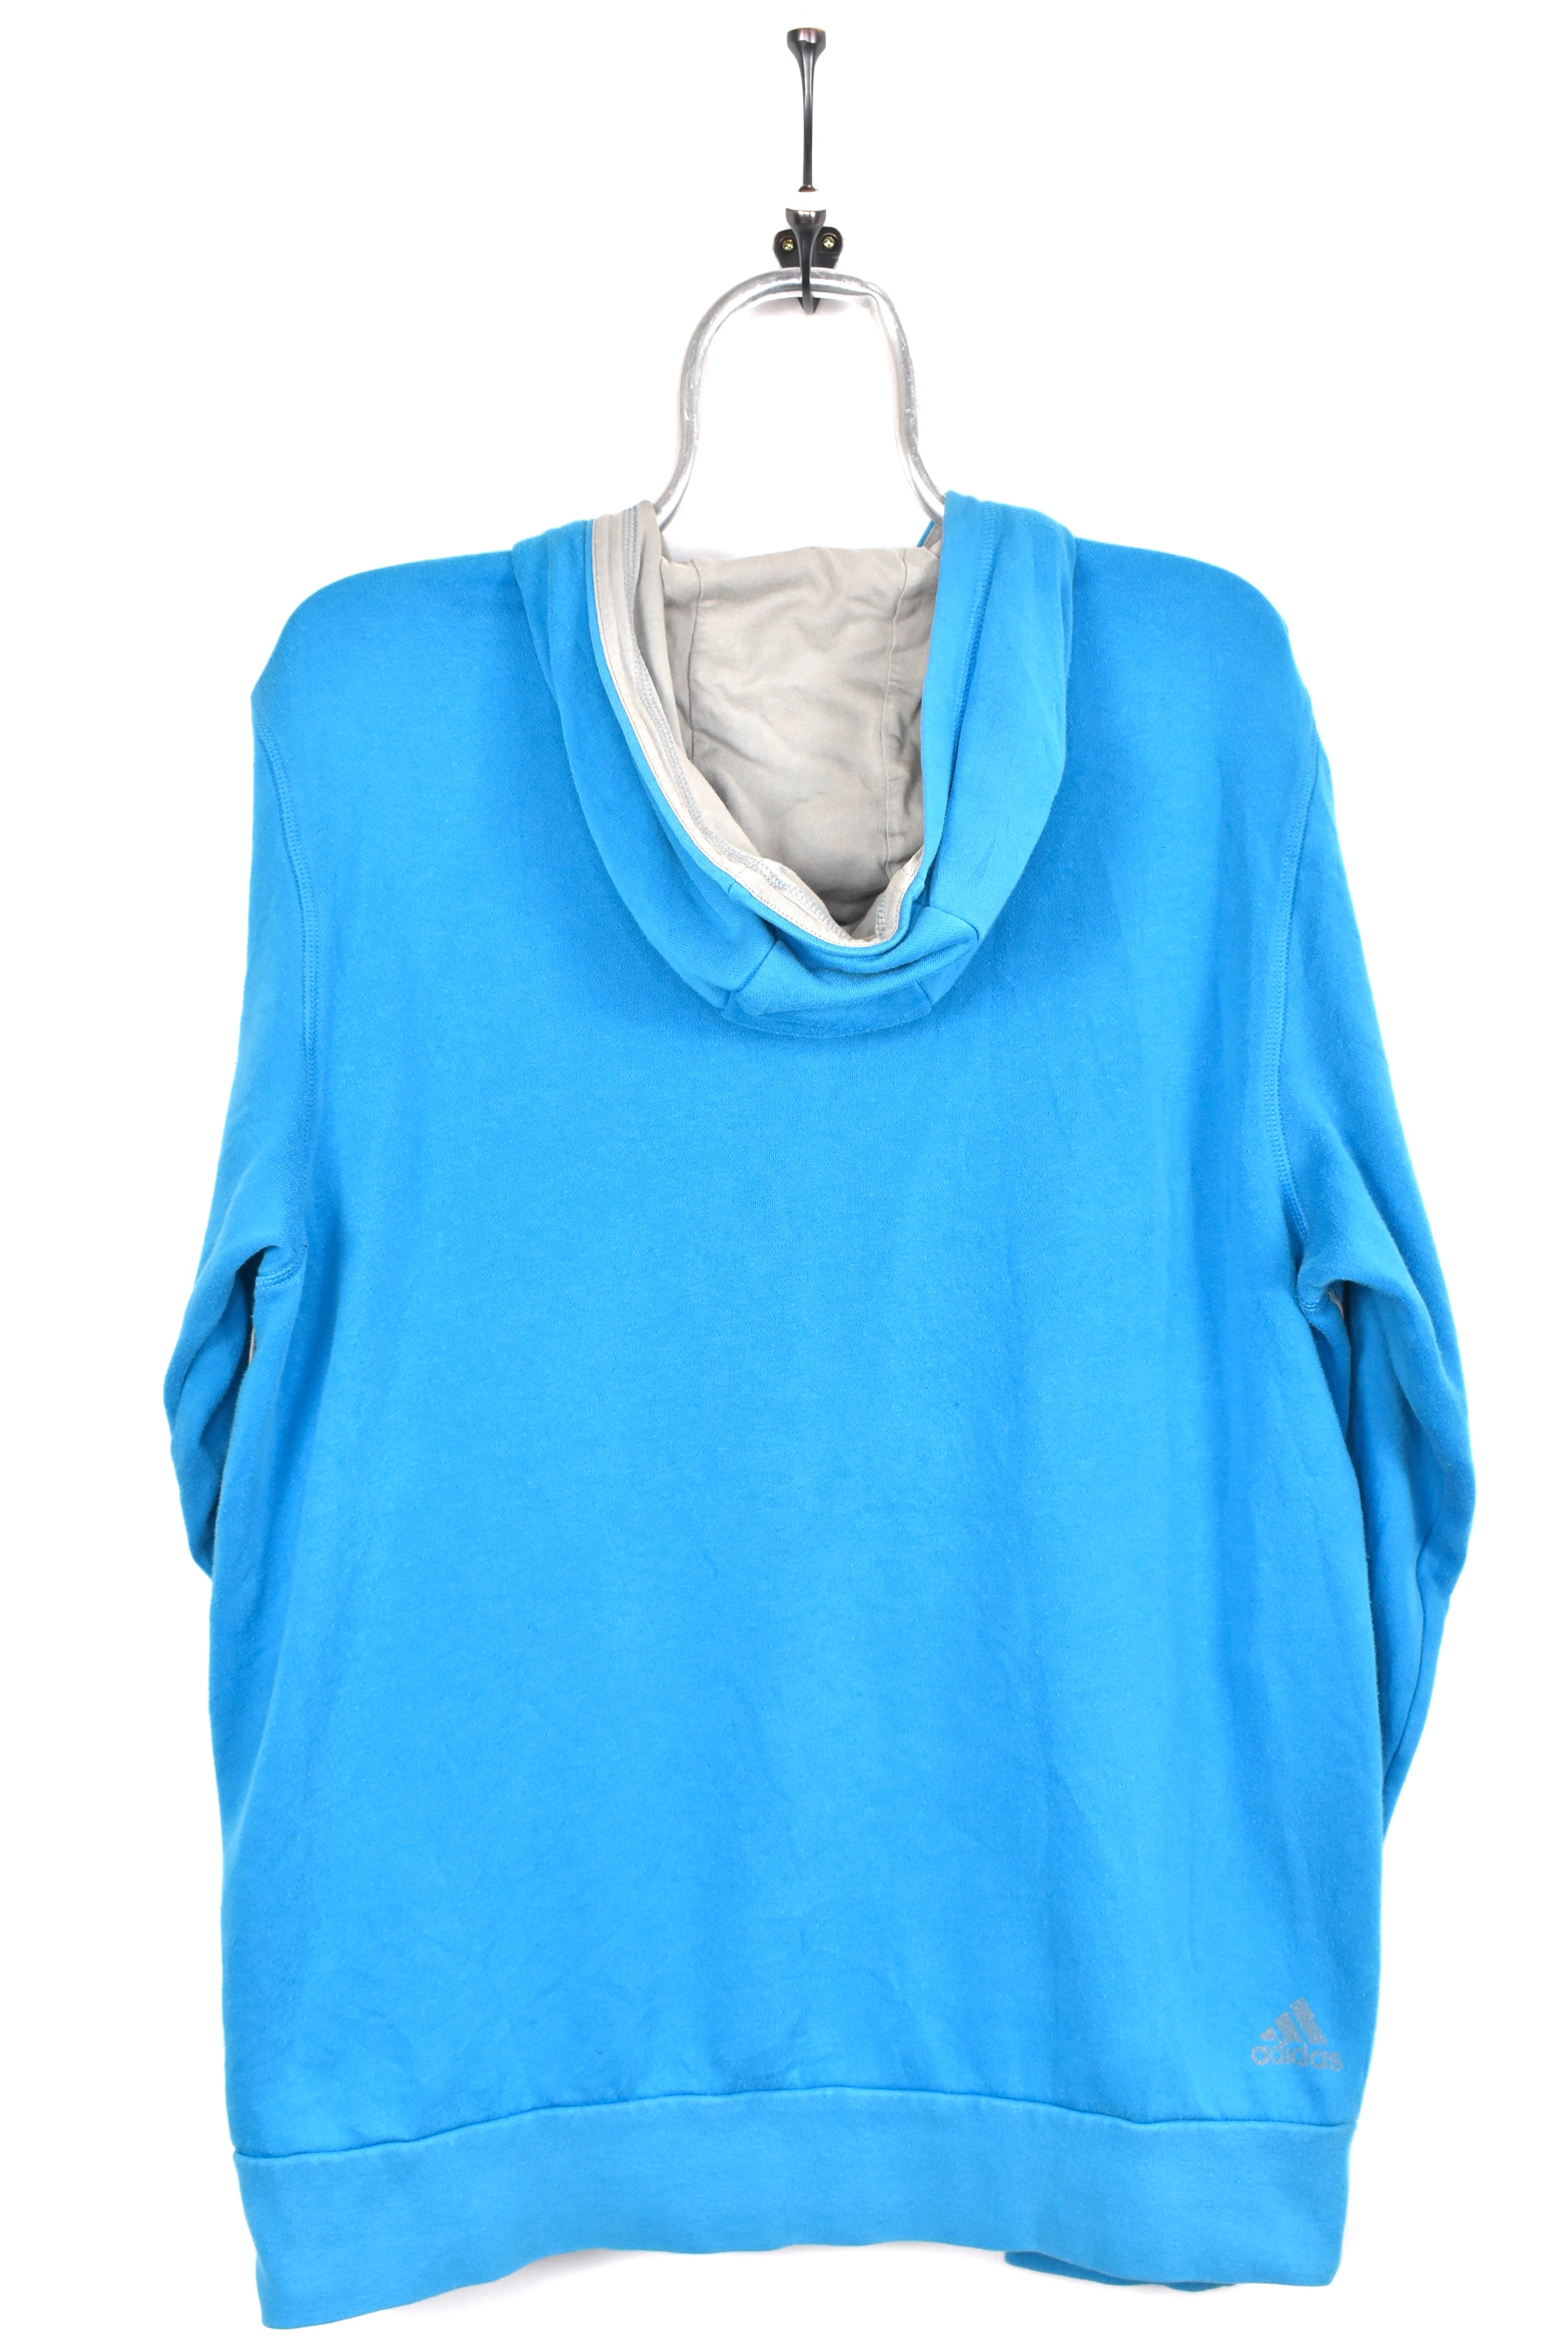 Women's vintage Adidas hoodie, blue graphic sweatshirt - AU XL ADIDAS